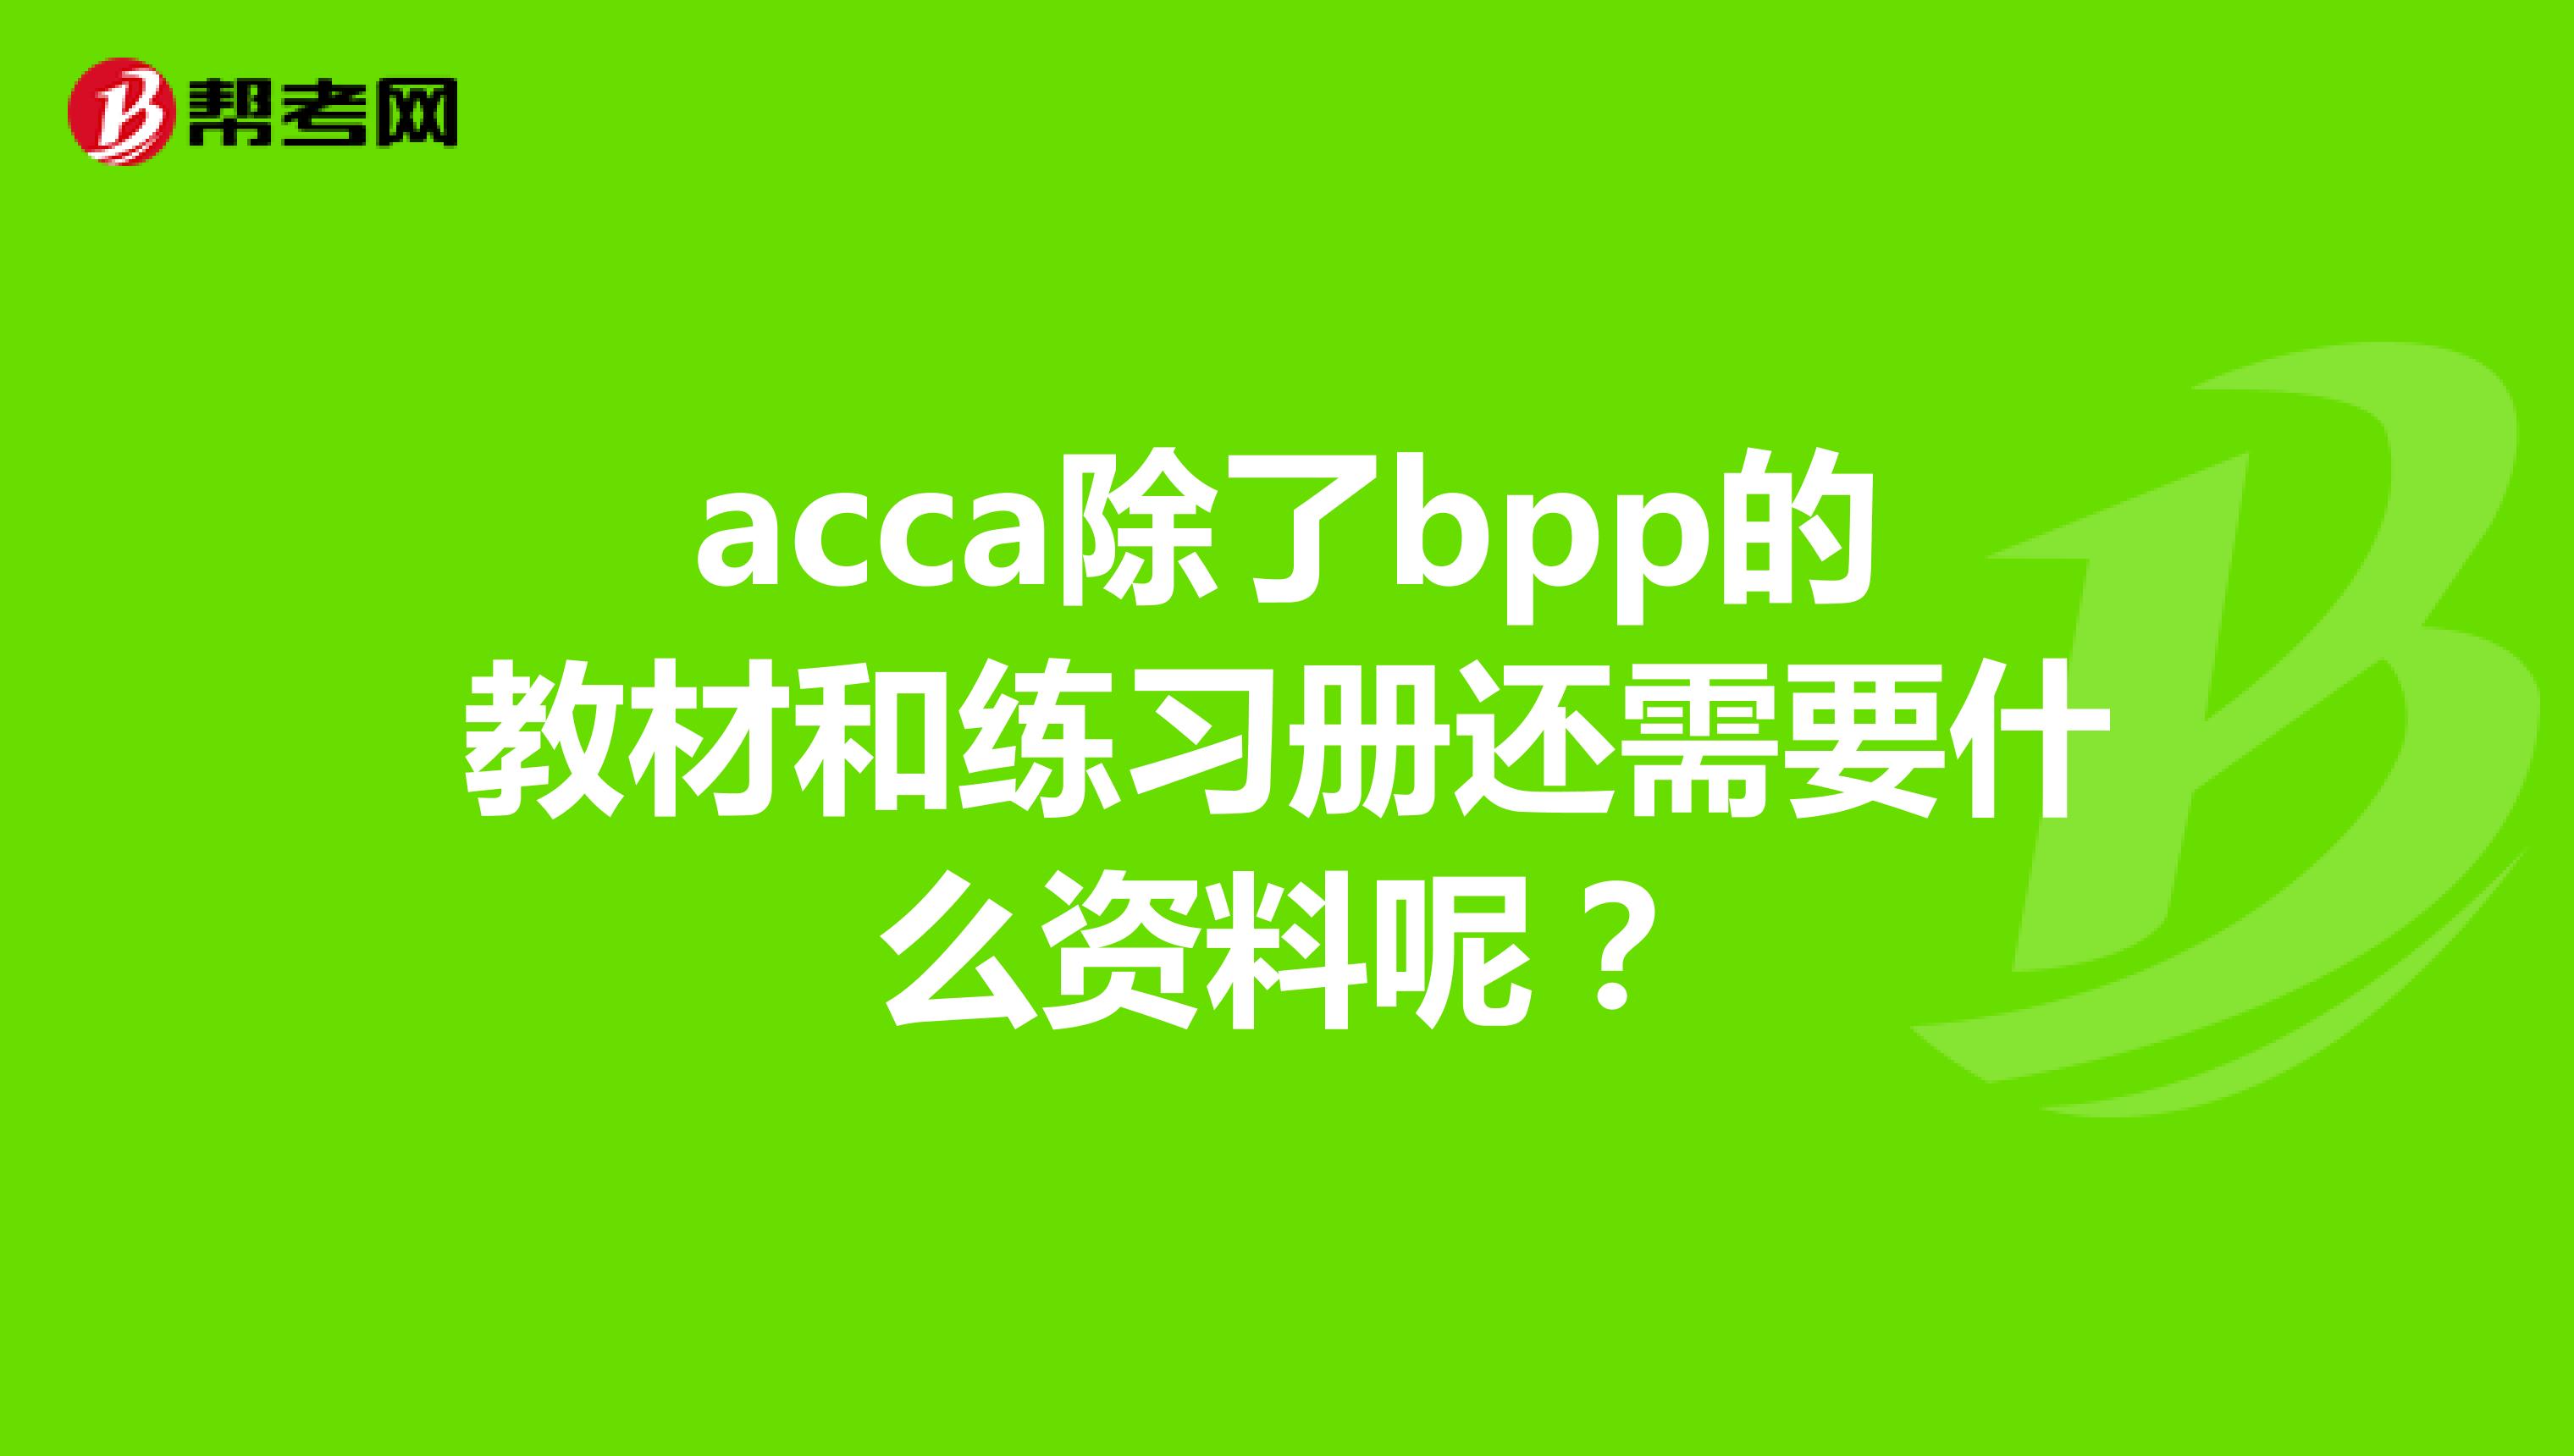 acca除了bpp的教材和练习册还需要什么资料呢？